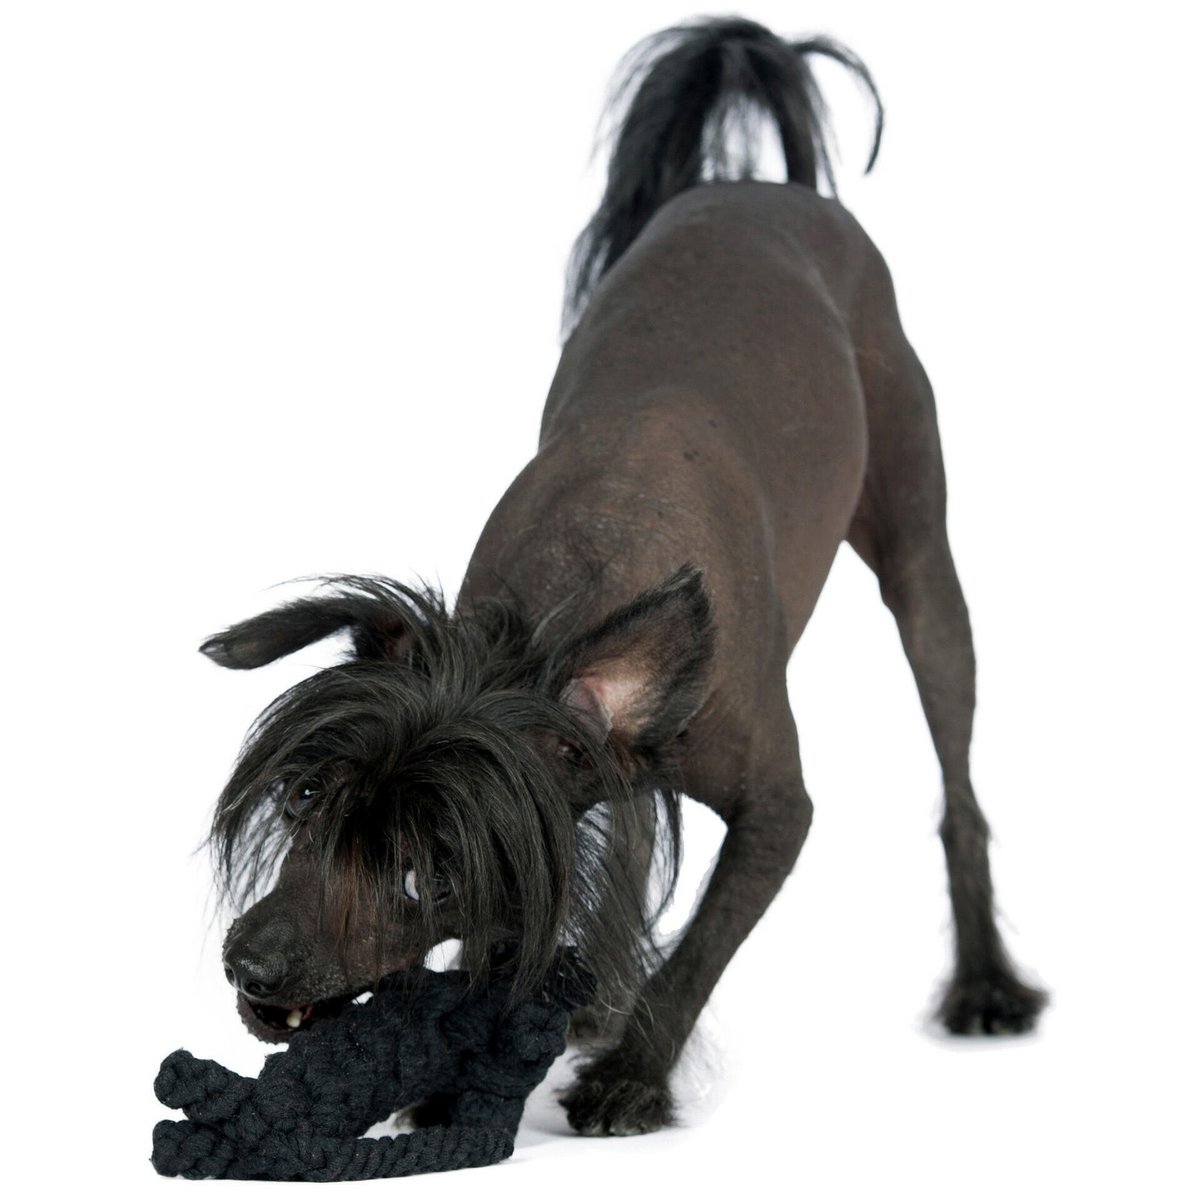 Kater Casanova Rope Toy - Dog Black 16x13x5 cm